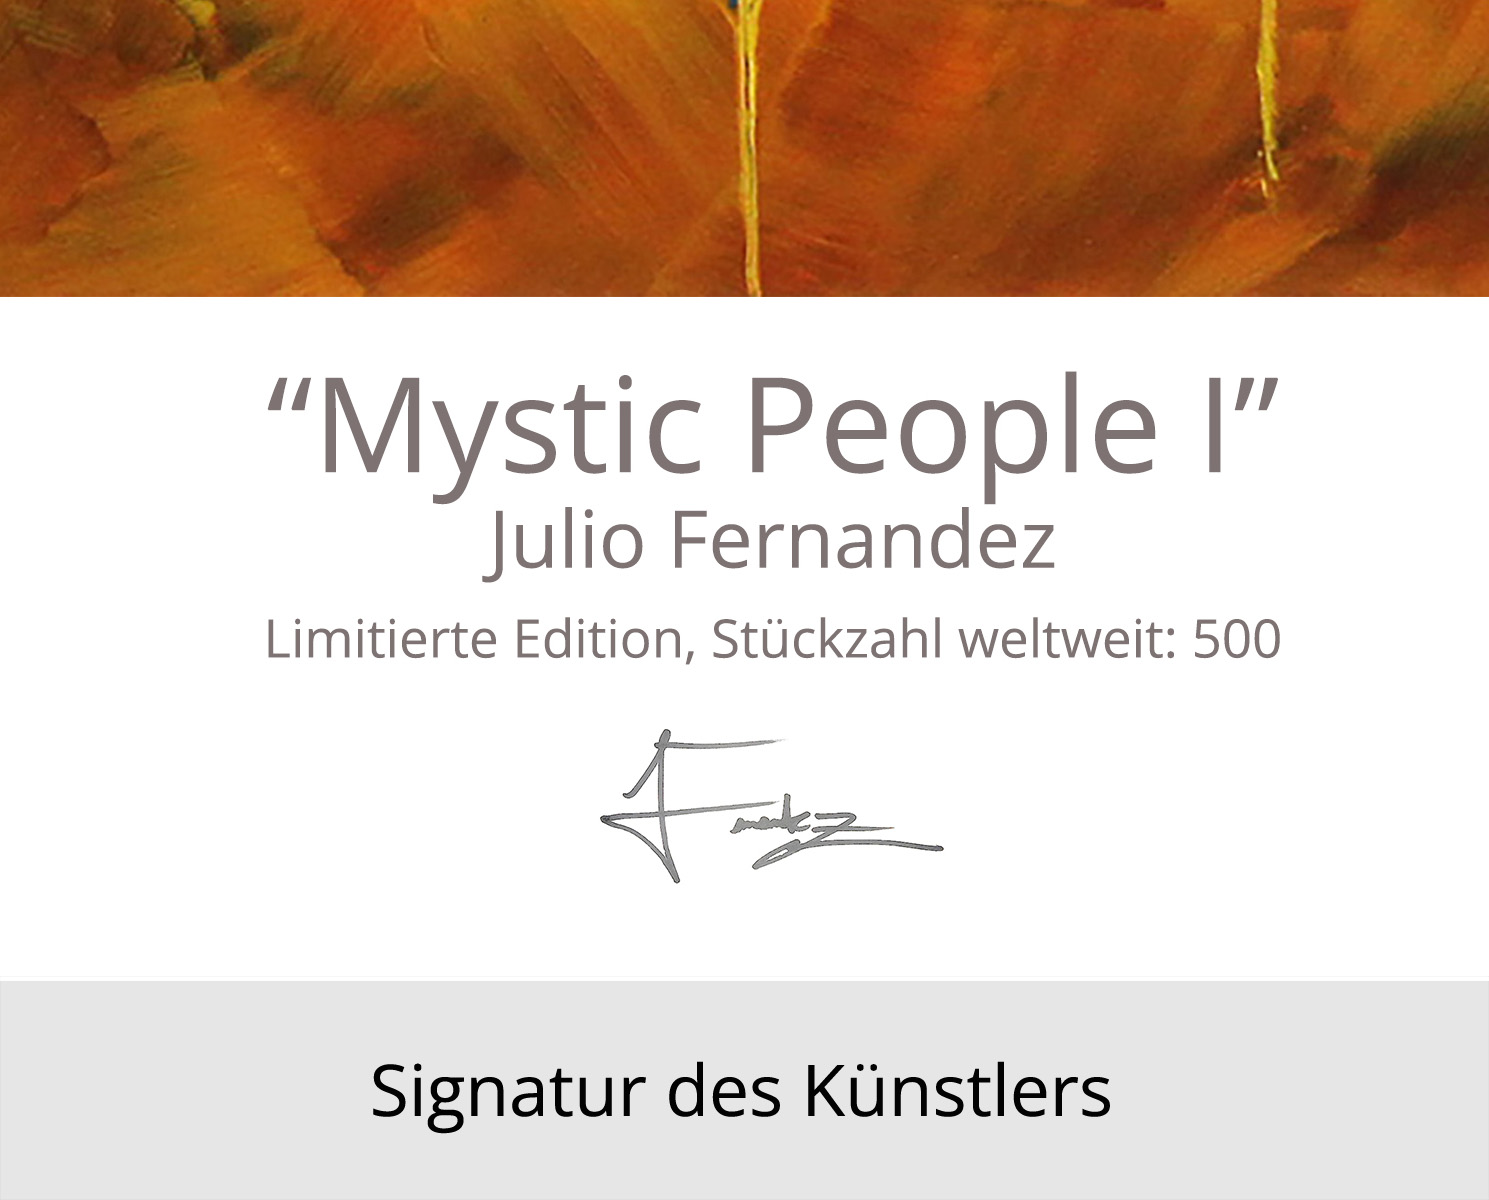 Limitierte Edition auf Papier, J. Fernandez "Mystic People I", Fineartprint